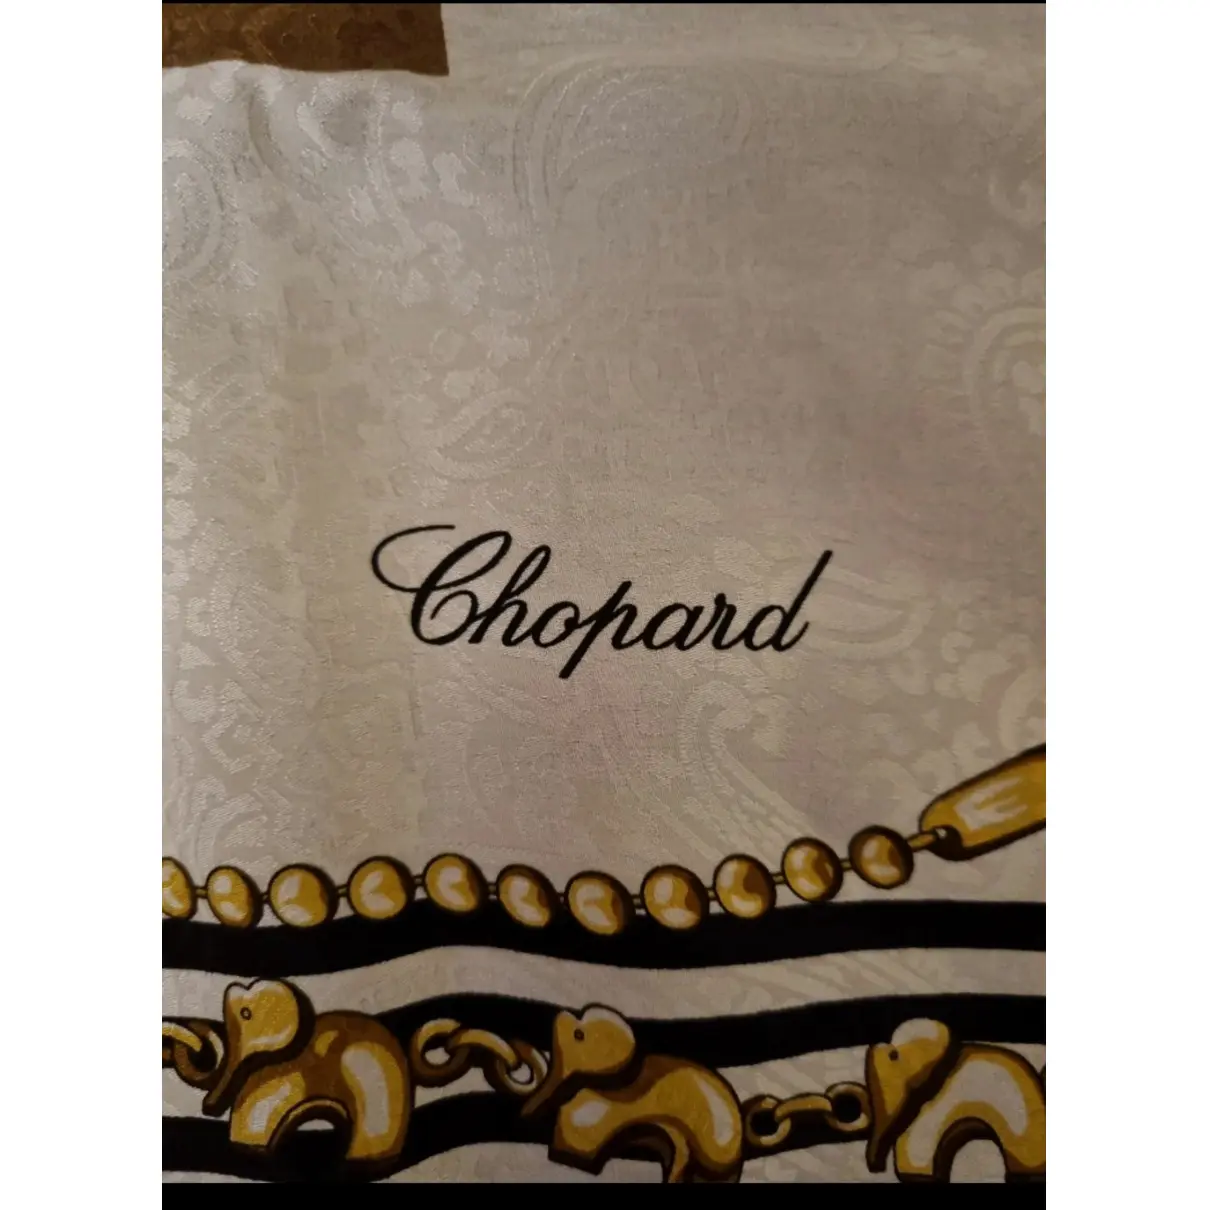 Buy Chopard Silk handkerchief online